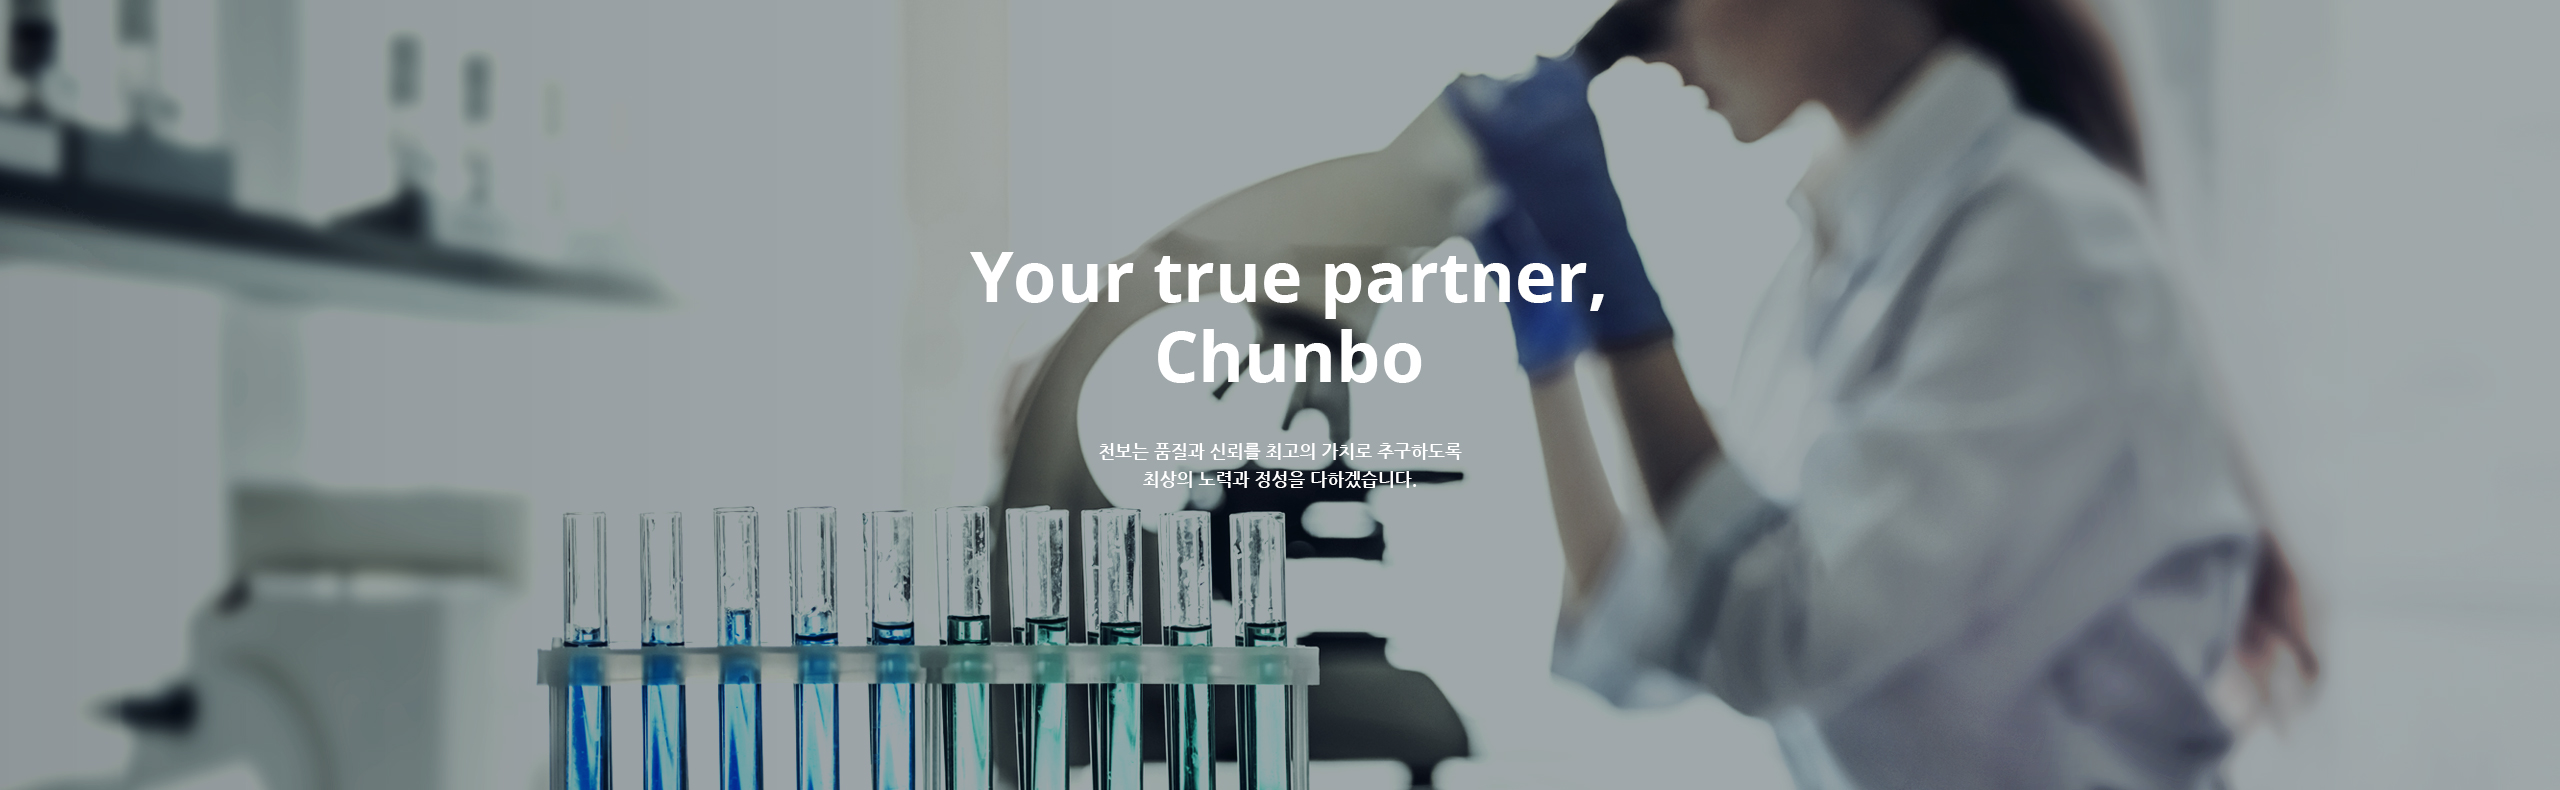 Your true partner, Chunbo